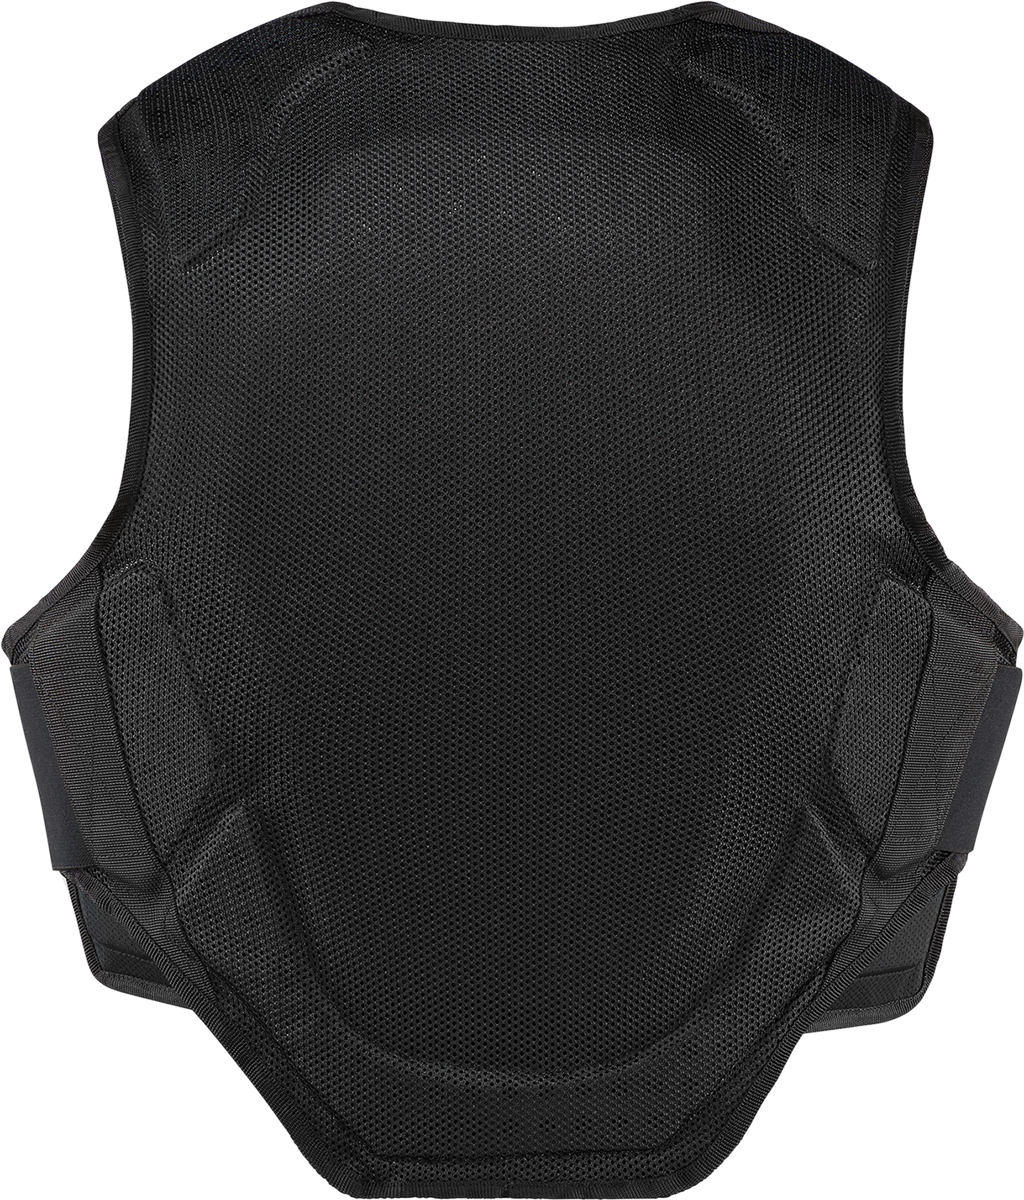 Softcore™ Vest - Black - Small/Medium - Lutzka's Garage